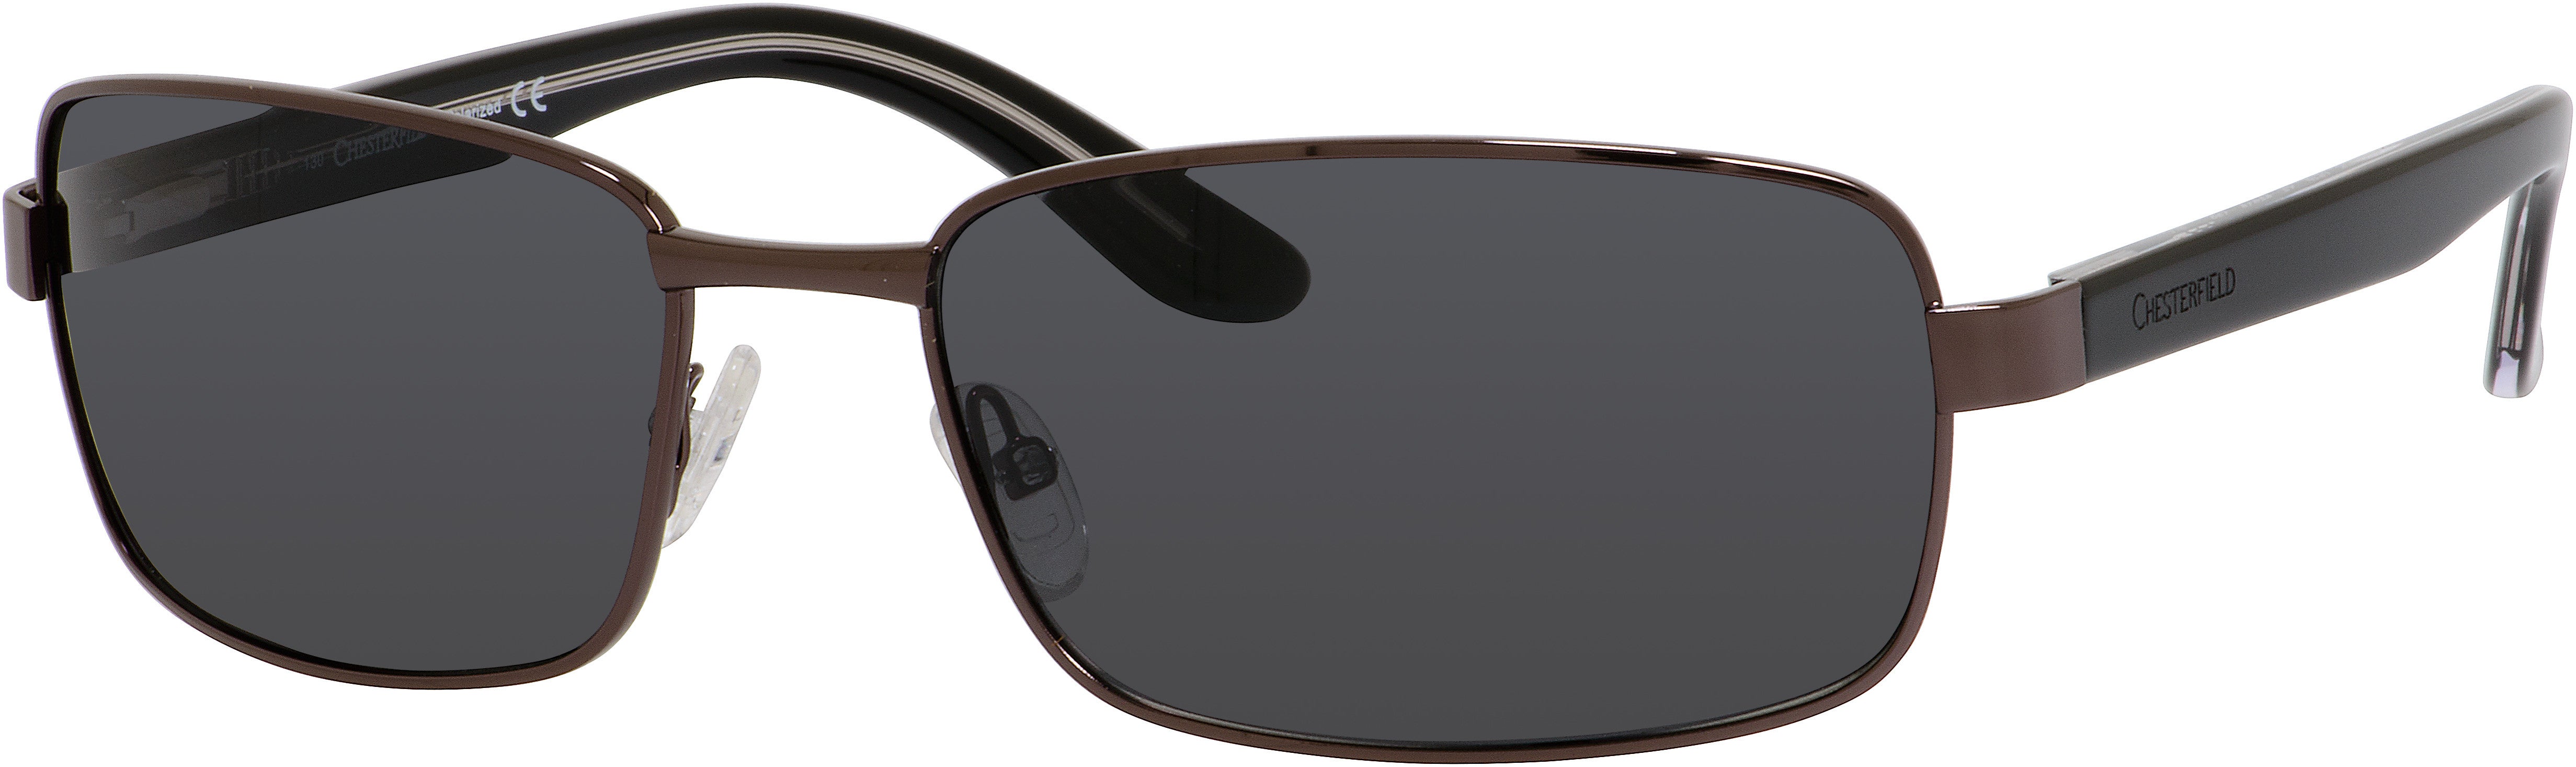 Chesterfield Collie/S Rectangular Sunglasses 7SJP-7SJP  Gunmetal (Y2 Gray Polarized)